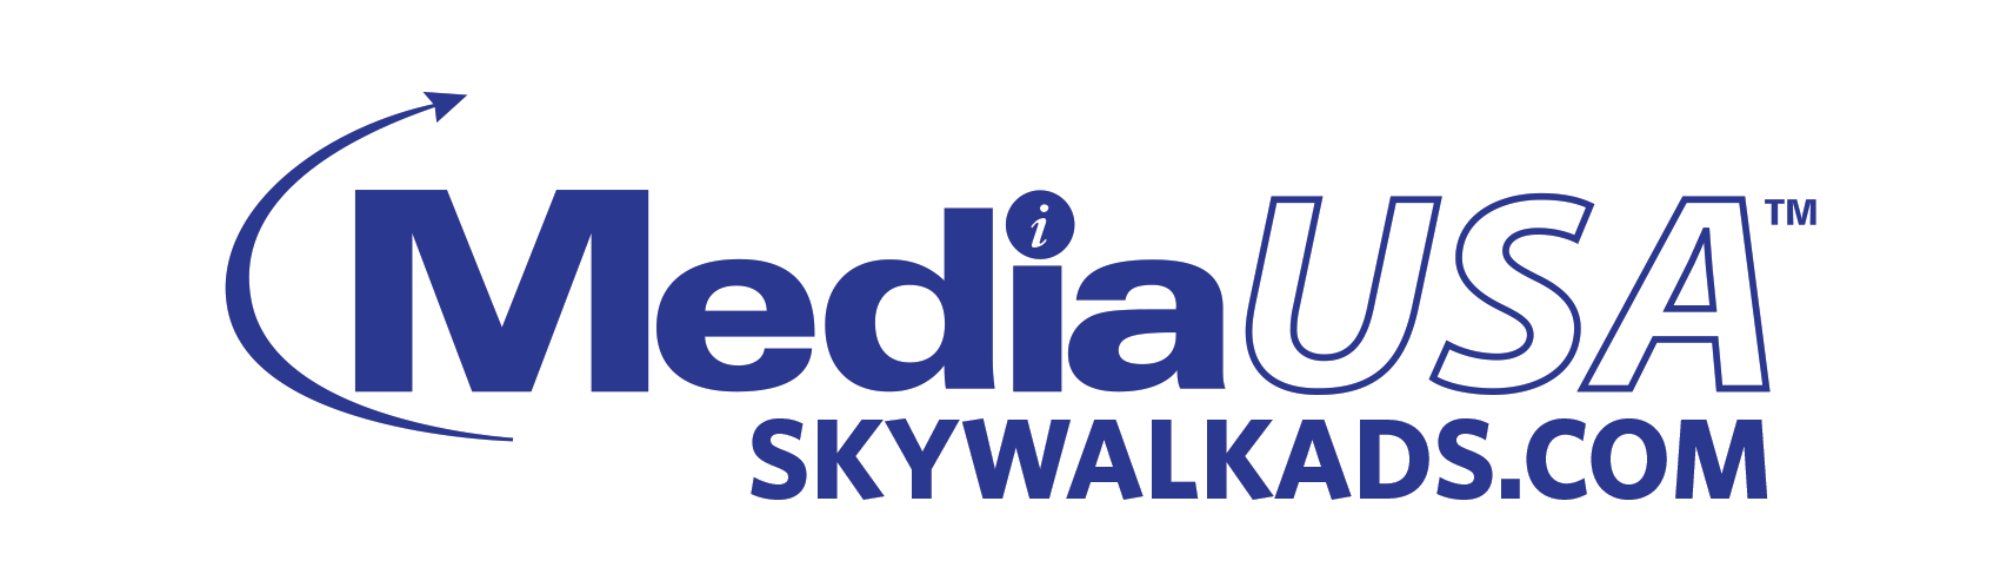 MediaUSA new logo_skywalkads_website_blue.pdf